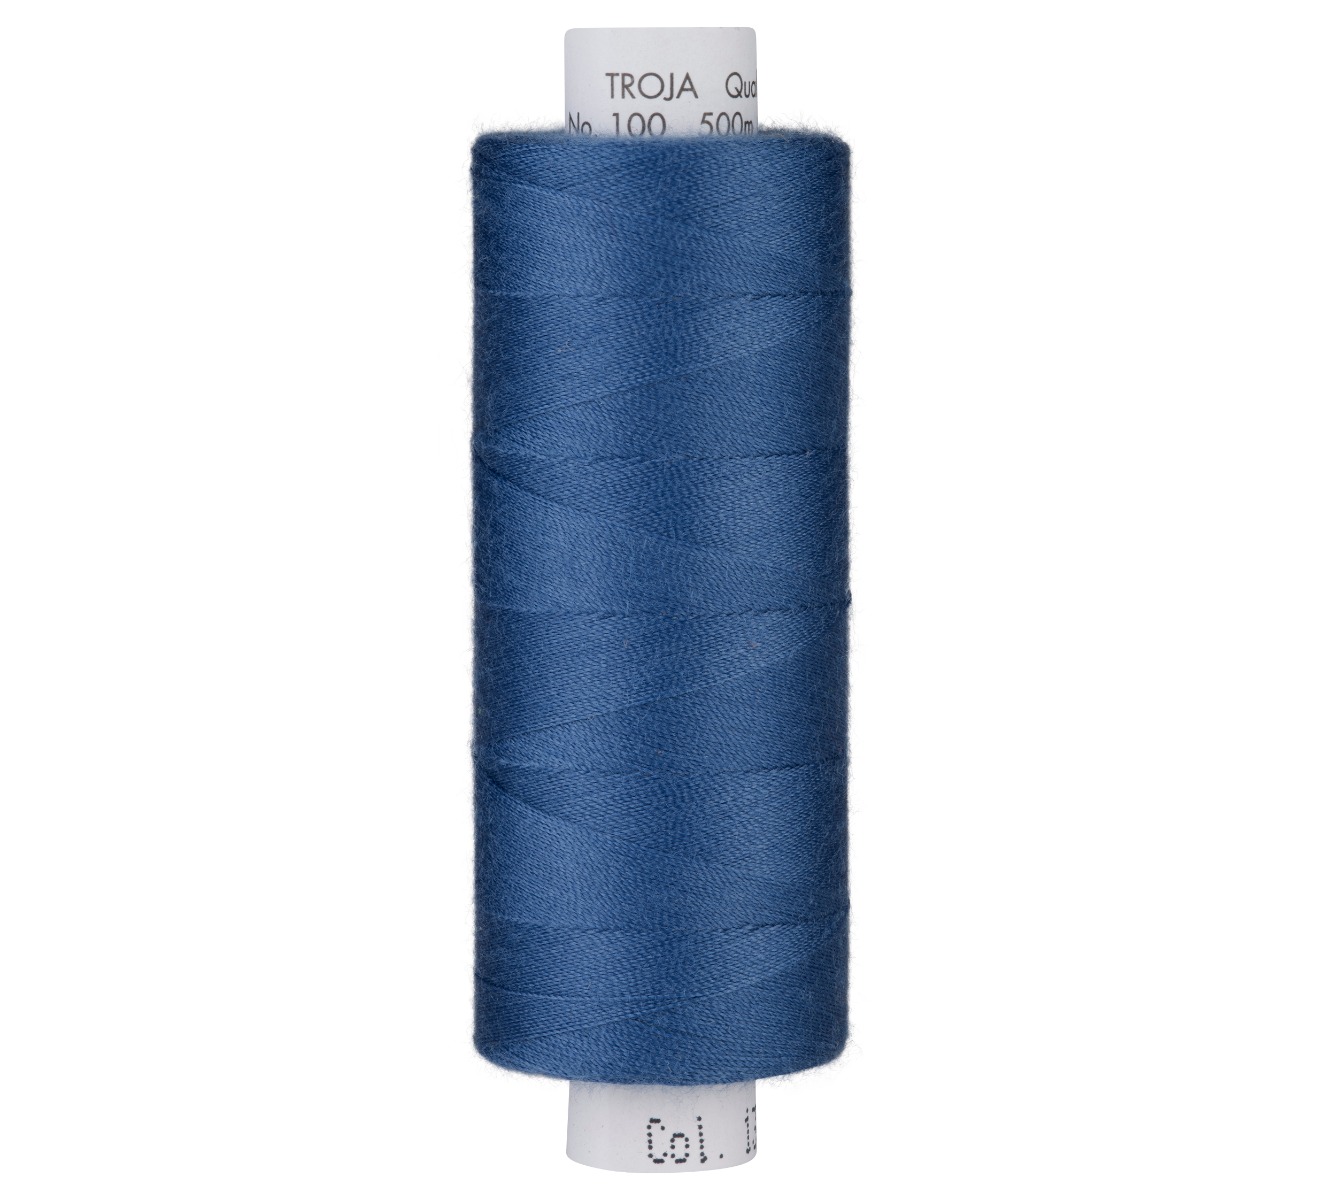 Troja Qualitätsnähgarn 500 m Rauchblau Farbe 1316